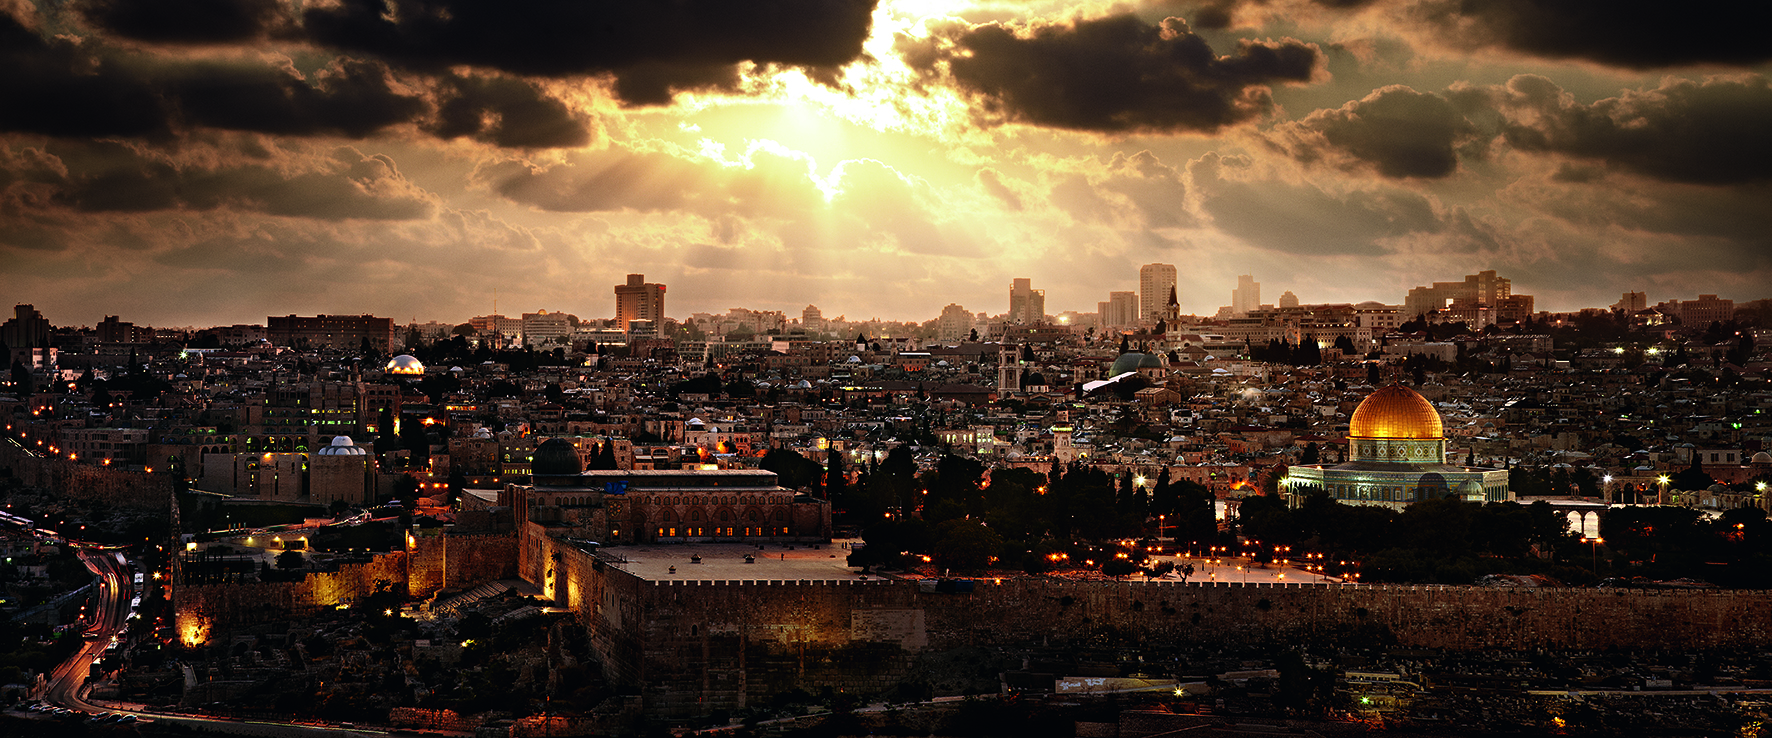 "Jerusalem" (David Drebin/teNeues)